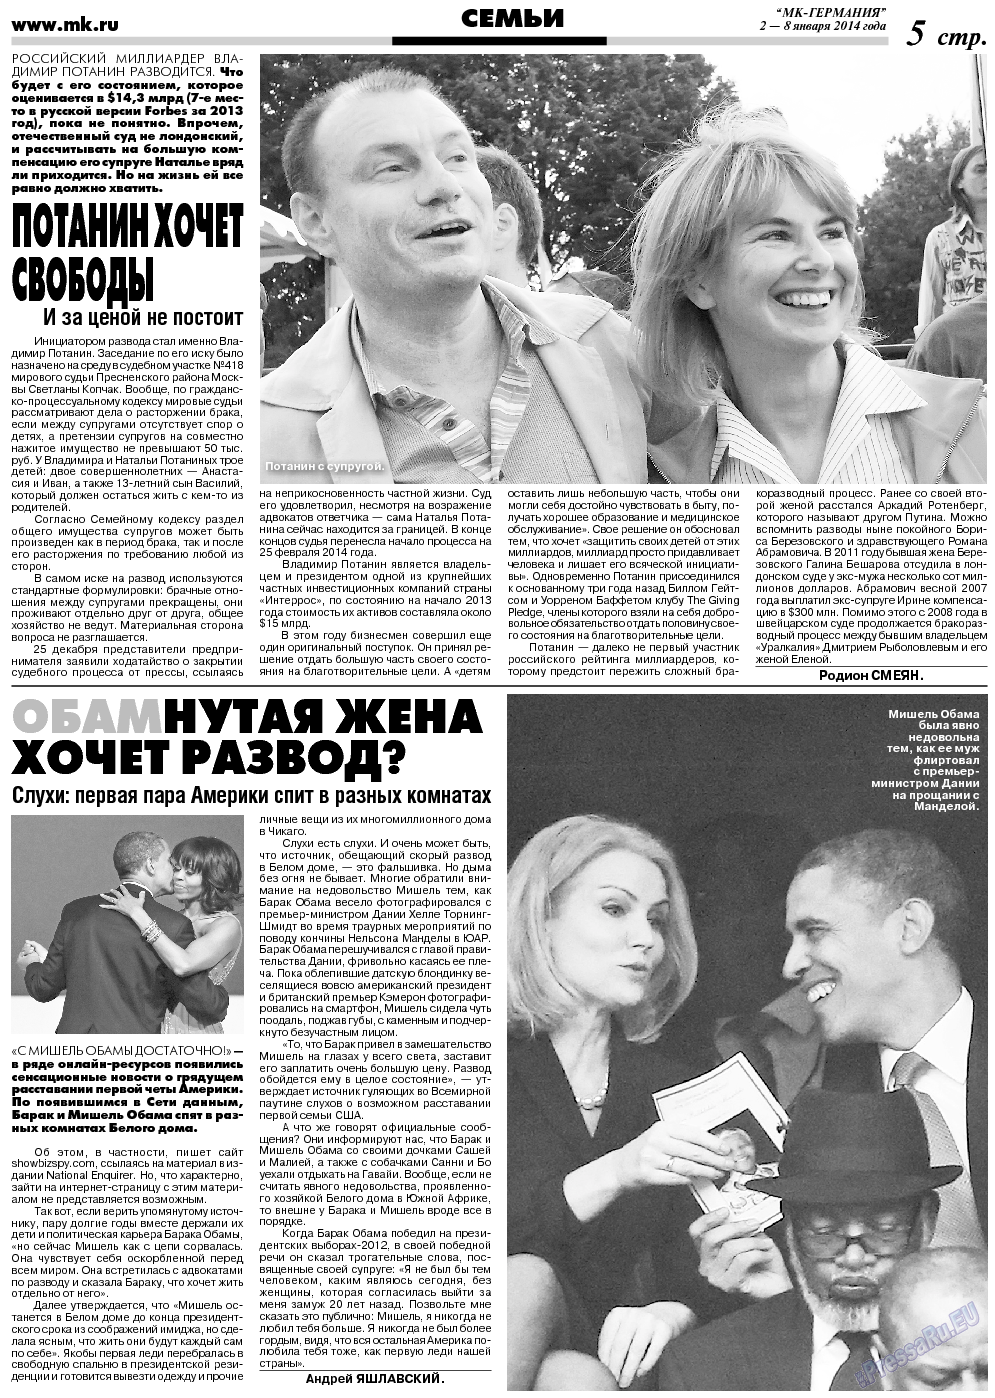 МК-Германия, газета. 2014 №1 стр.5